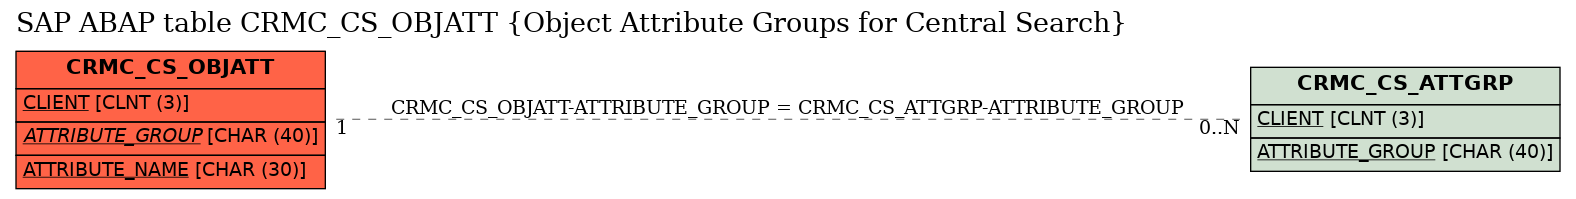 E-R Diagram for table CRMC_CS_OBJATT (Object Attribute Groups for Central Search)